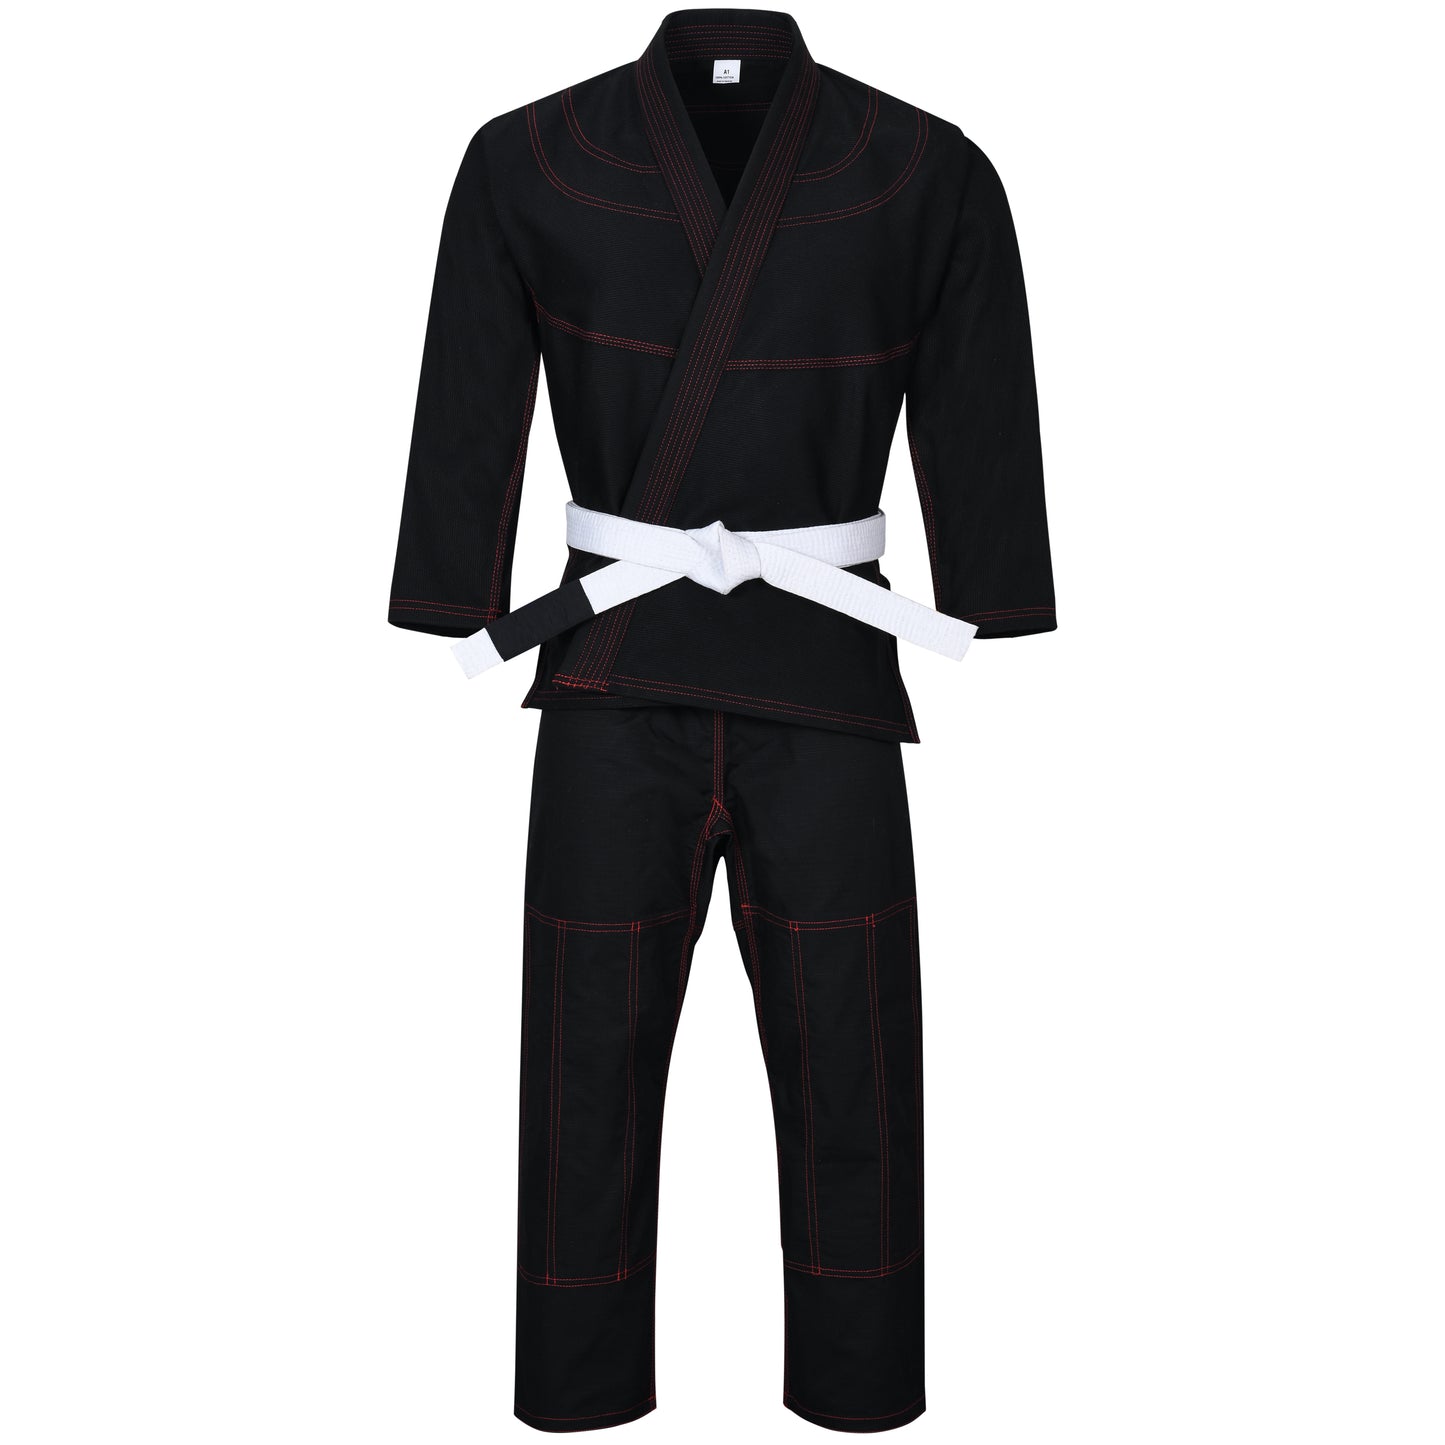 Brazilian Jiu Jitsu Gi for Men and Women, Lightweight and Preshrunk With a Free White Belt for Grappling Uniform Kimonos